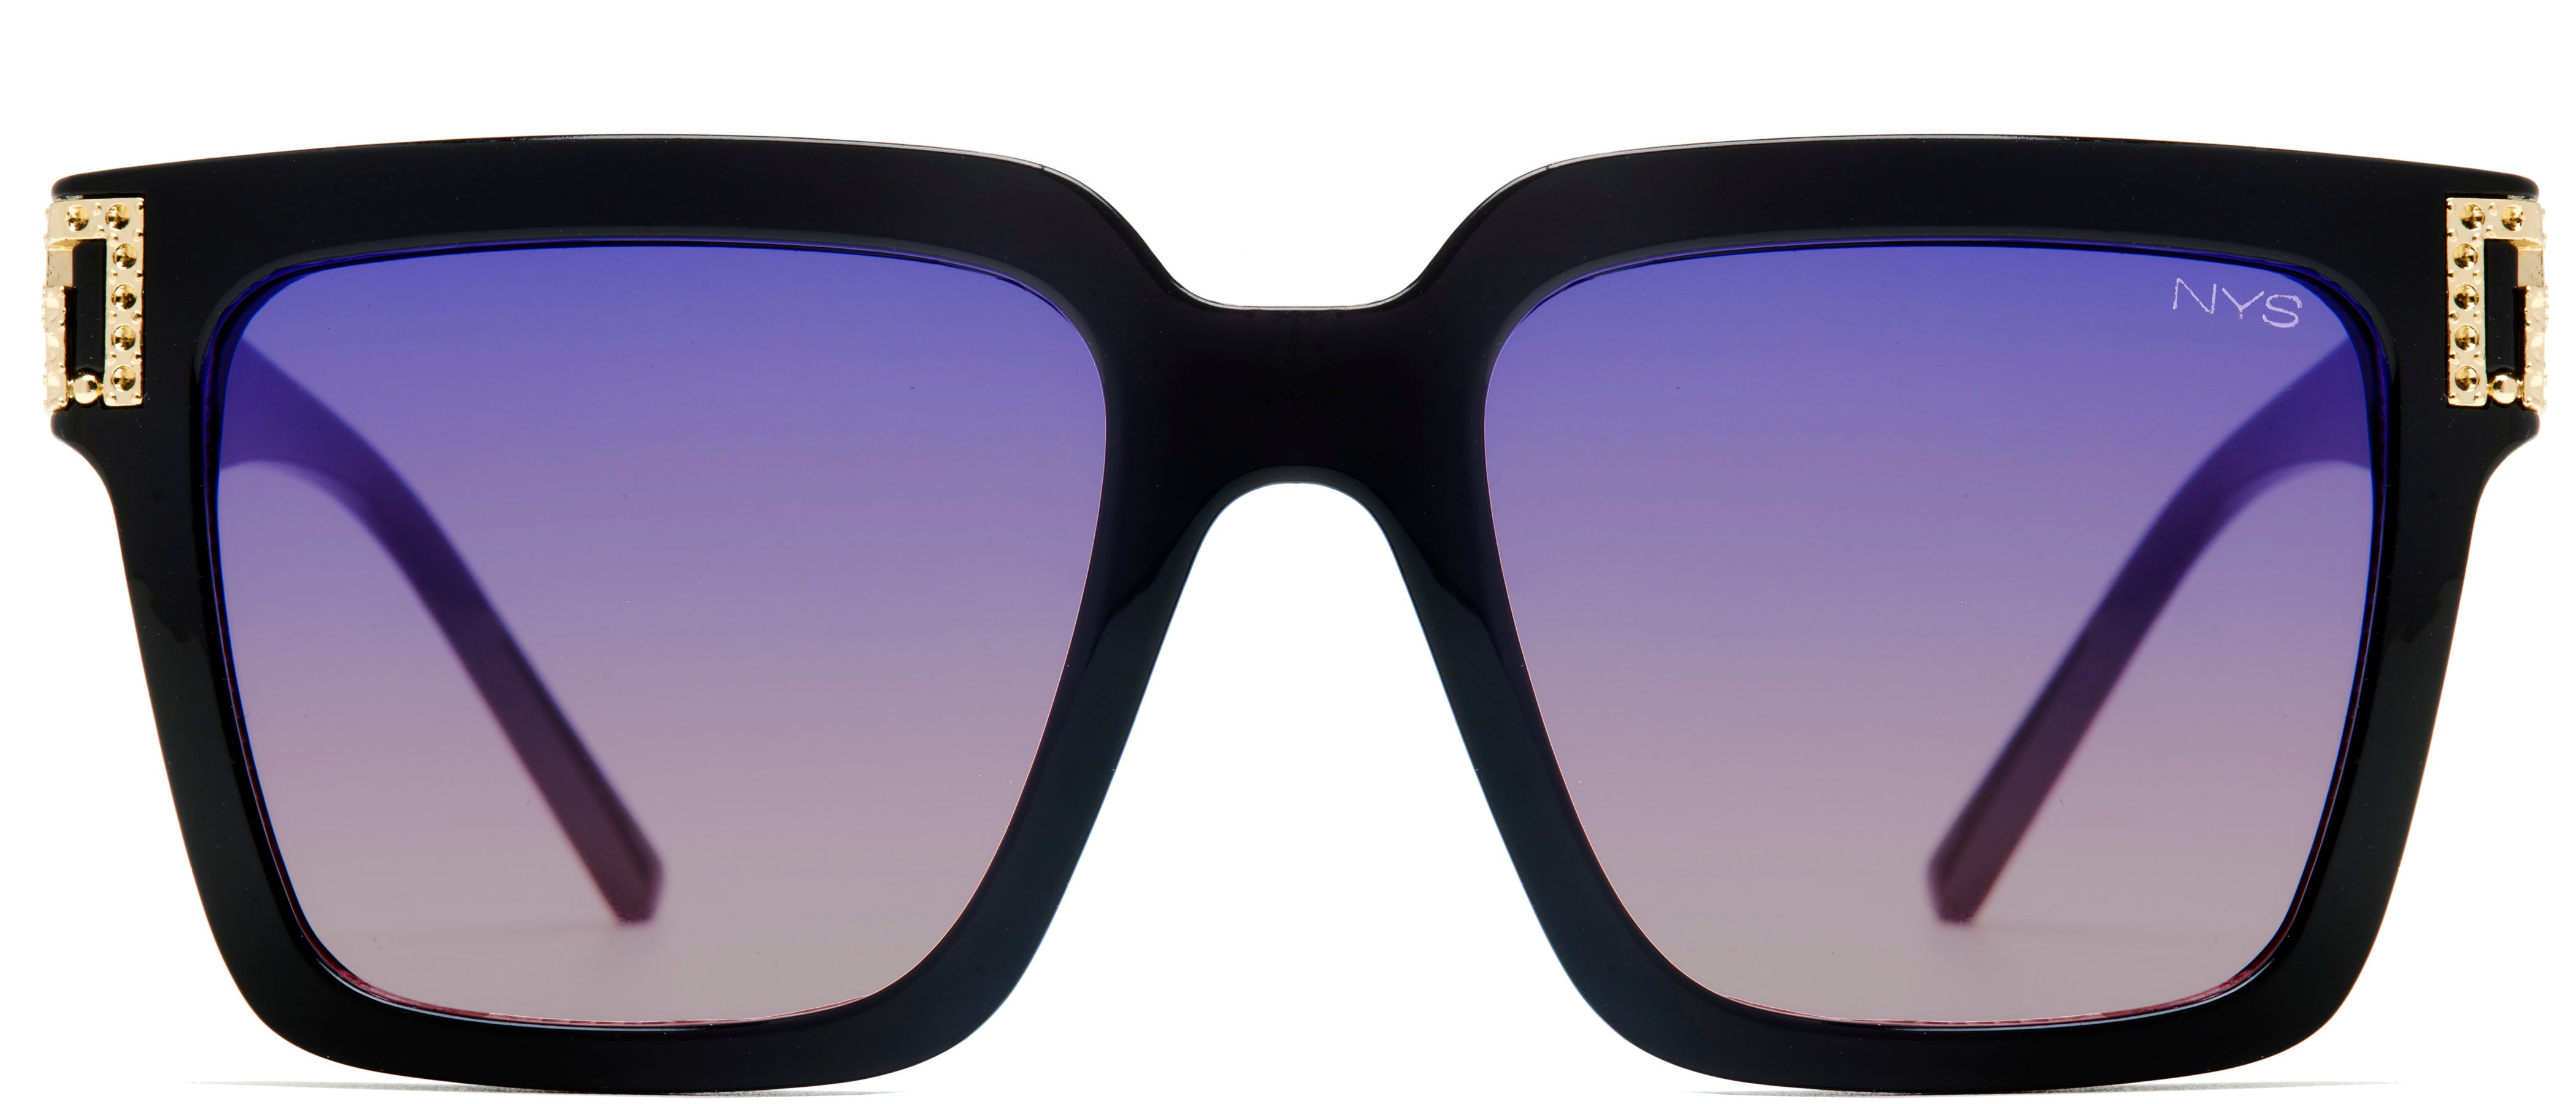 Parsons Boulevard Vintage Sunglasses - NYS Collection Eyewear